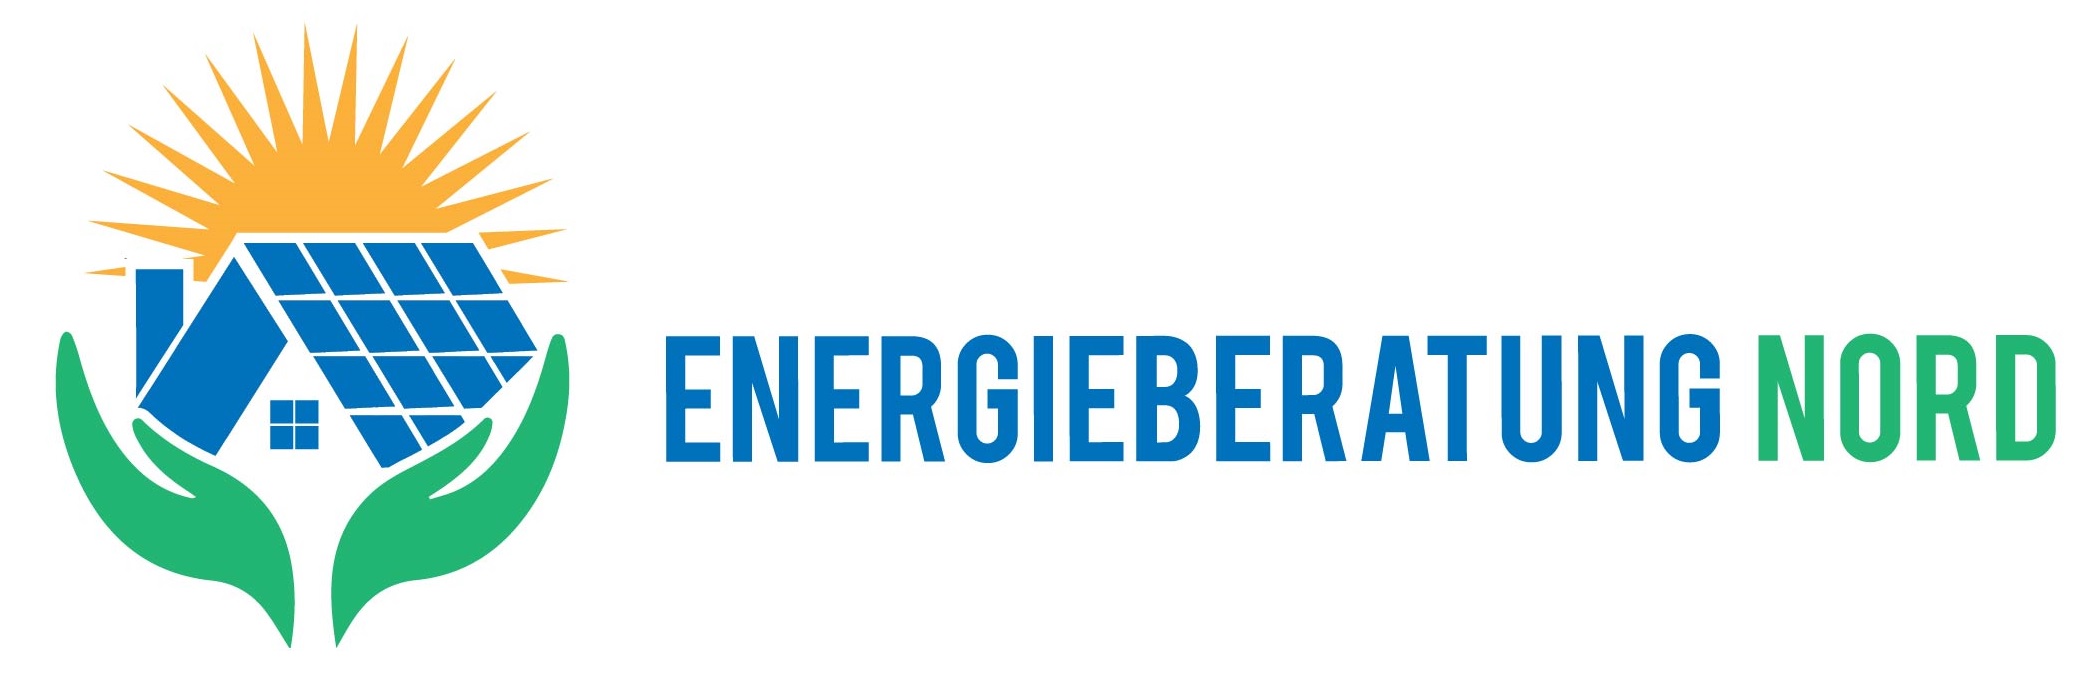 (c) Energieberatung-nord.com